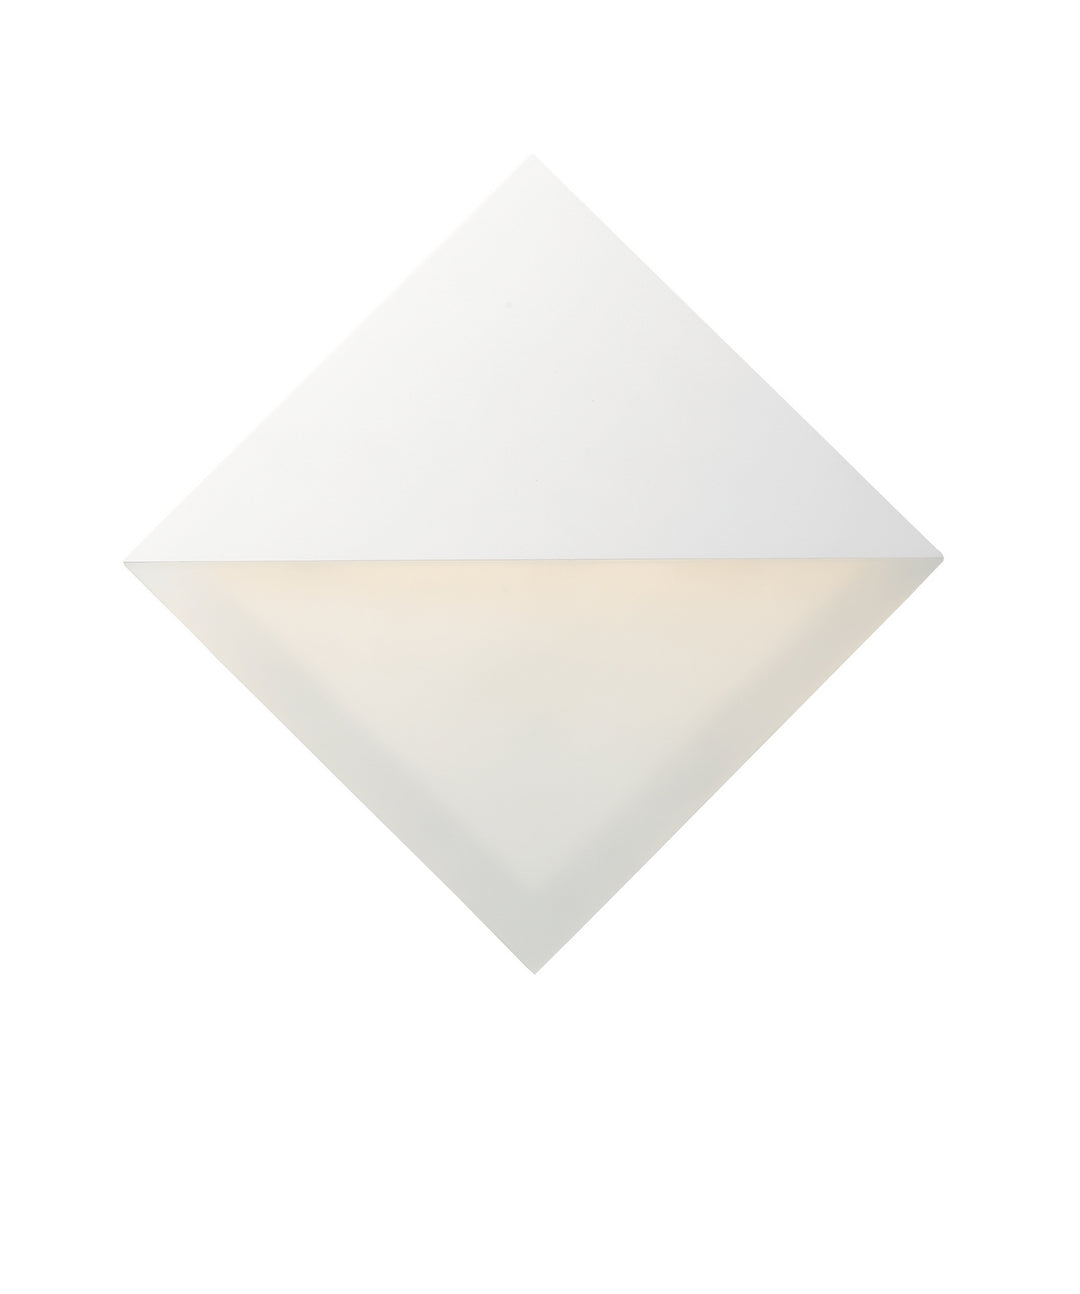 ET2 by Maxim Alumilux Glow E41284-WT Wall Light - White